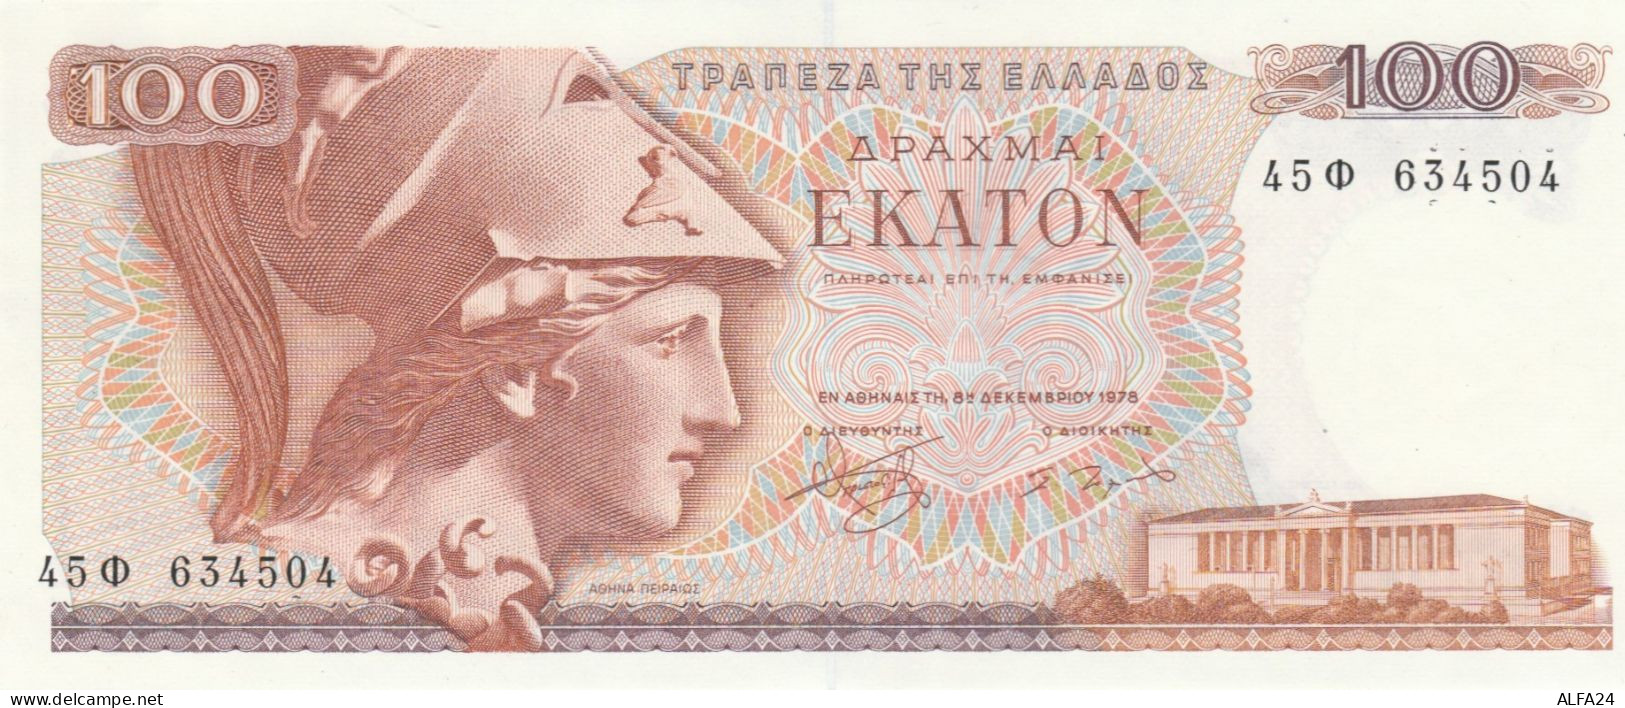 BANCONOTA GRECIA 100 UNC (RY2682 - Griechenland